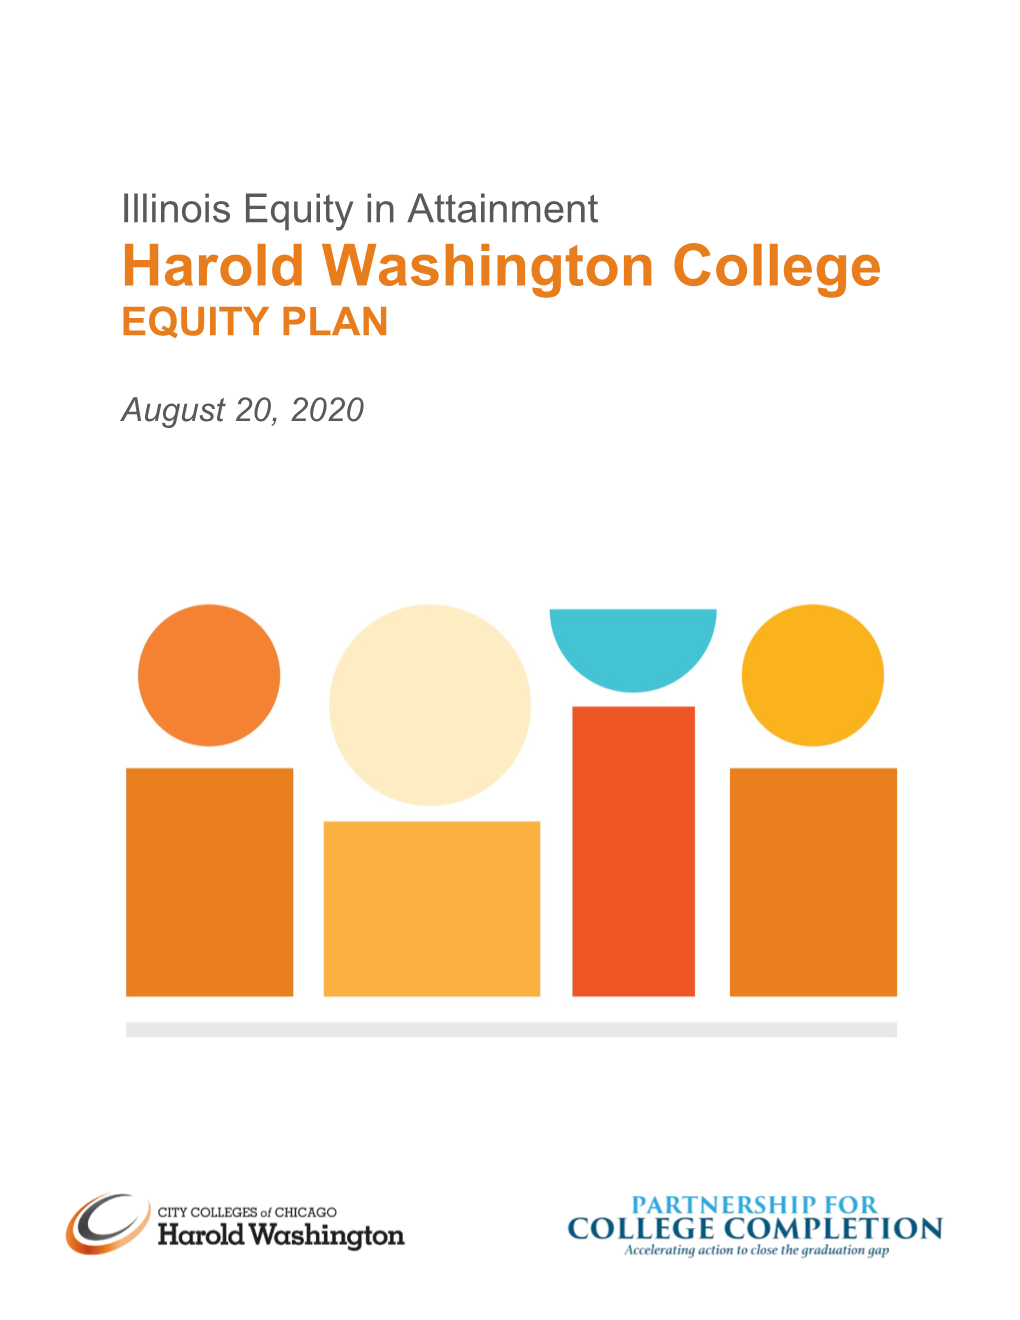 Harold Washington College EQUITY PLAN